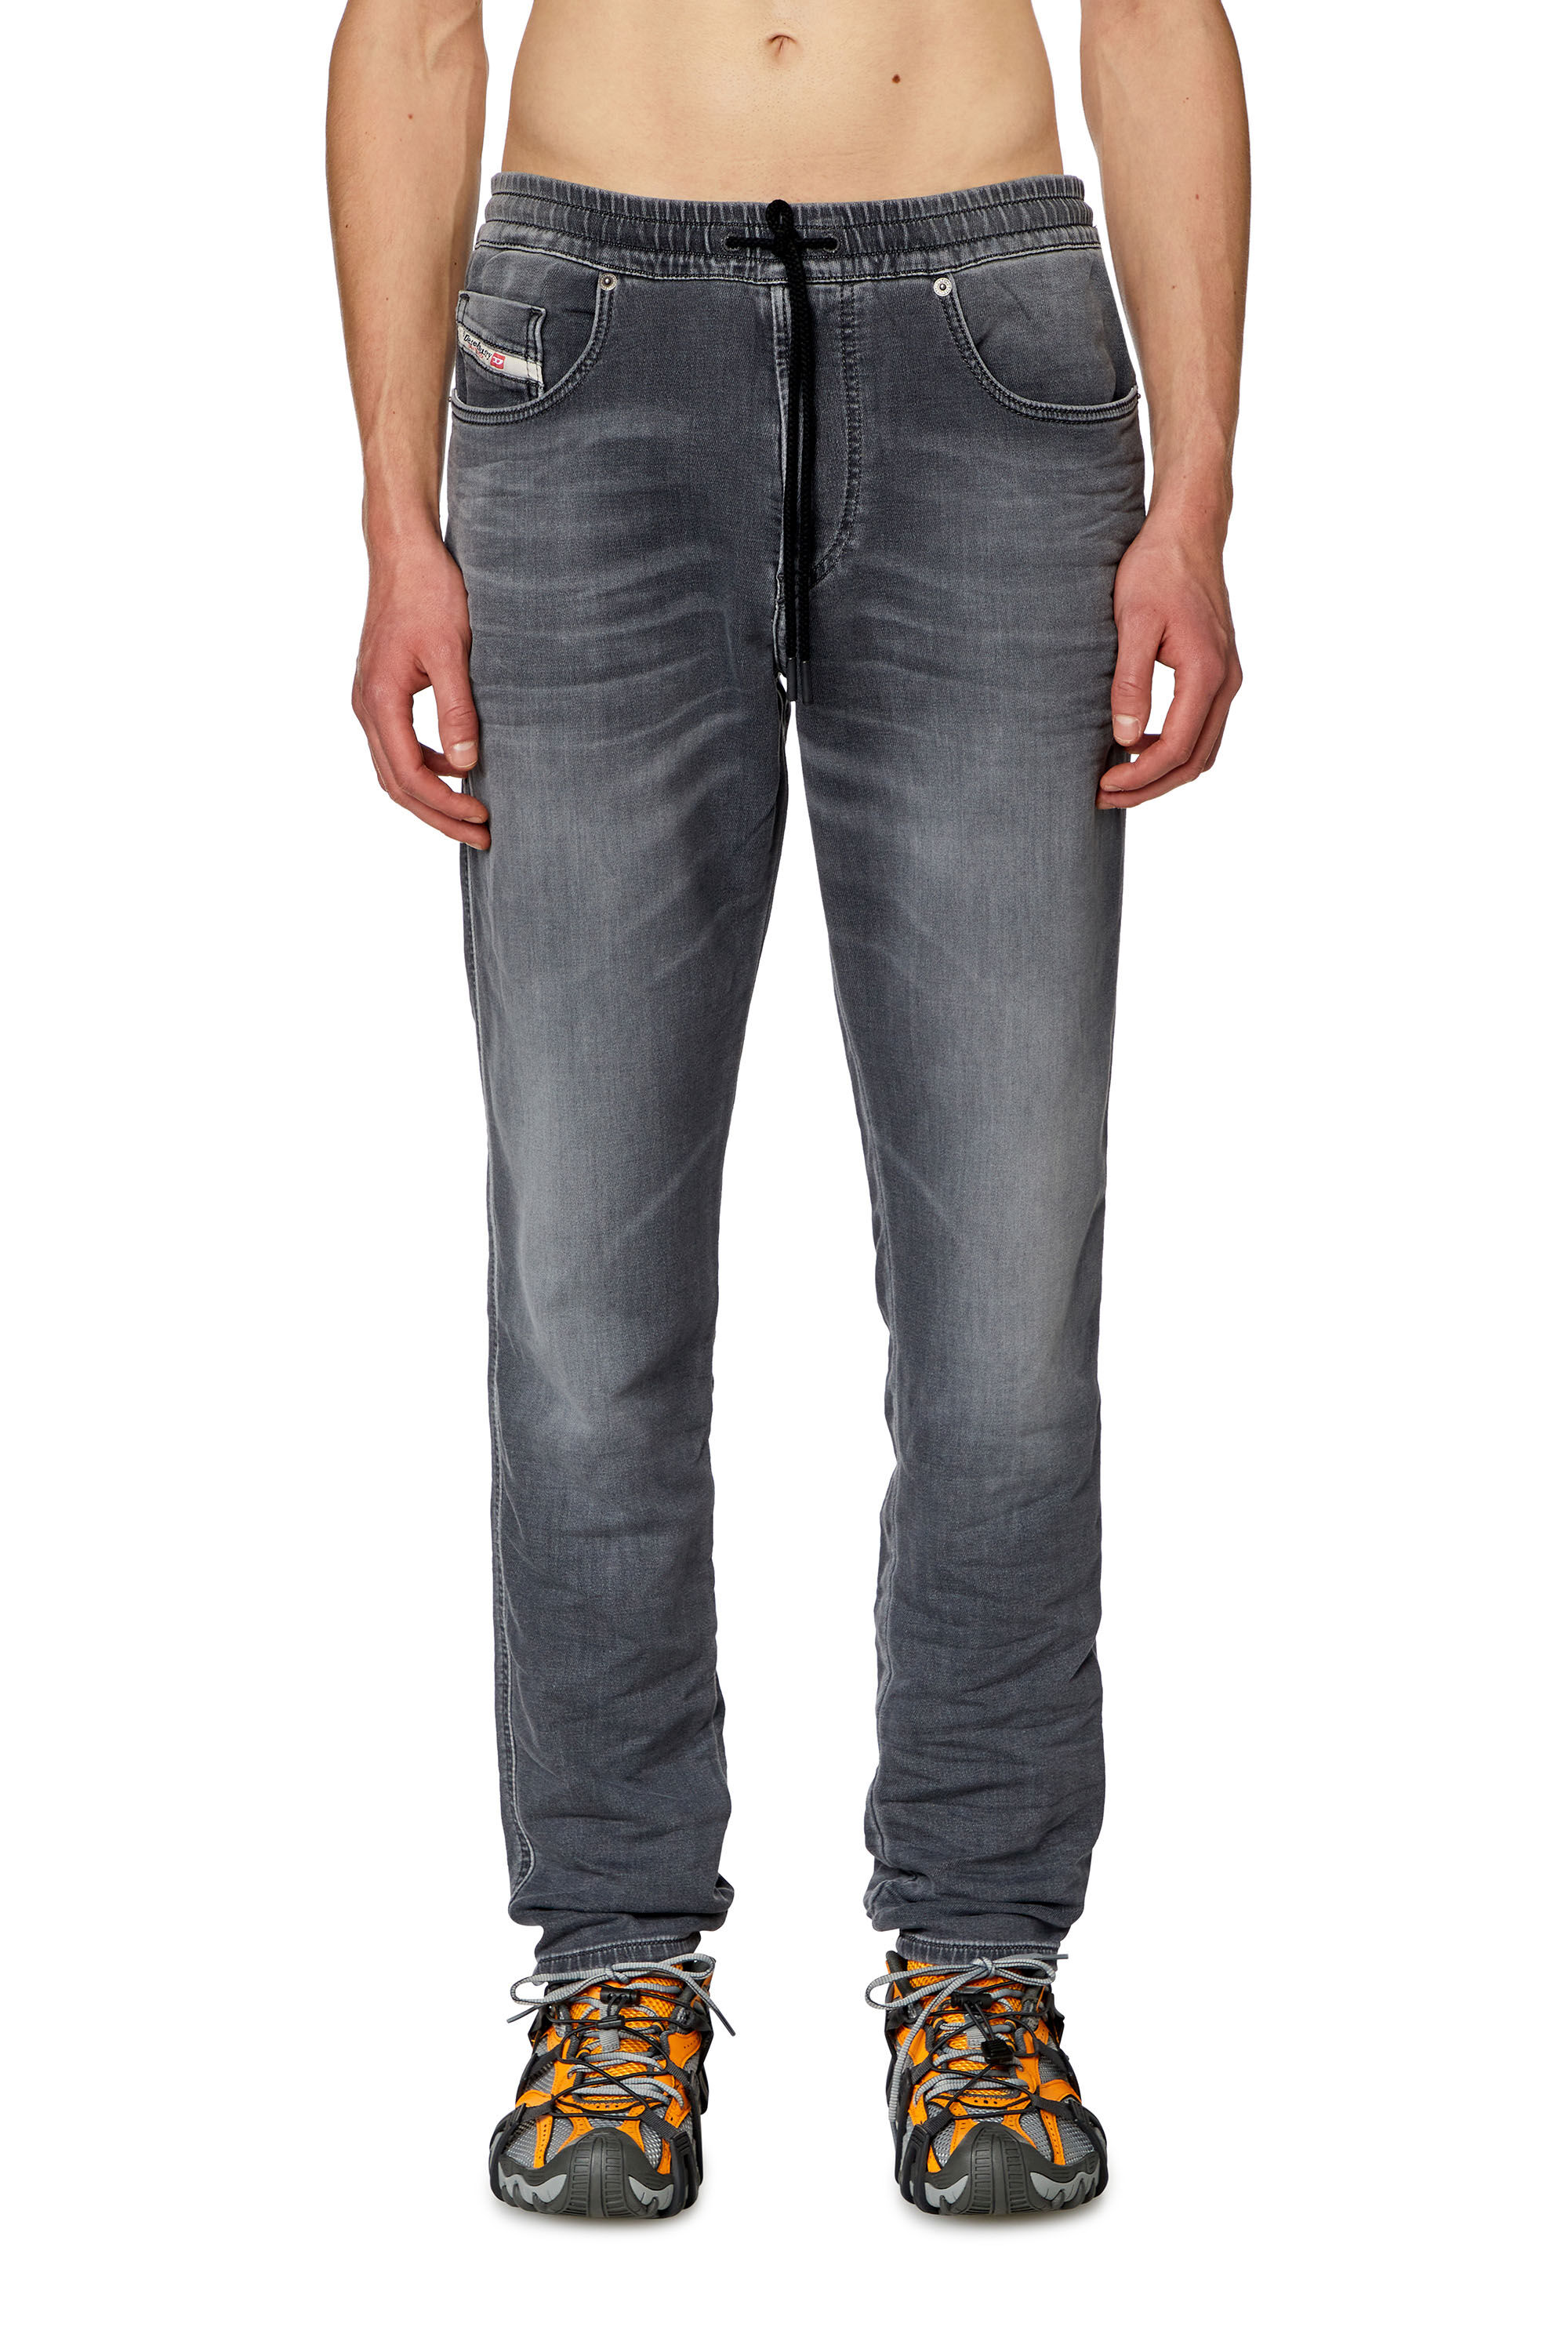 Men's Slim Jeans | Grey | Diesel 2060 D-Strukt Joggjeans®